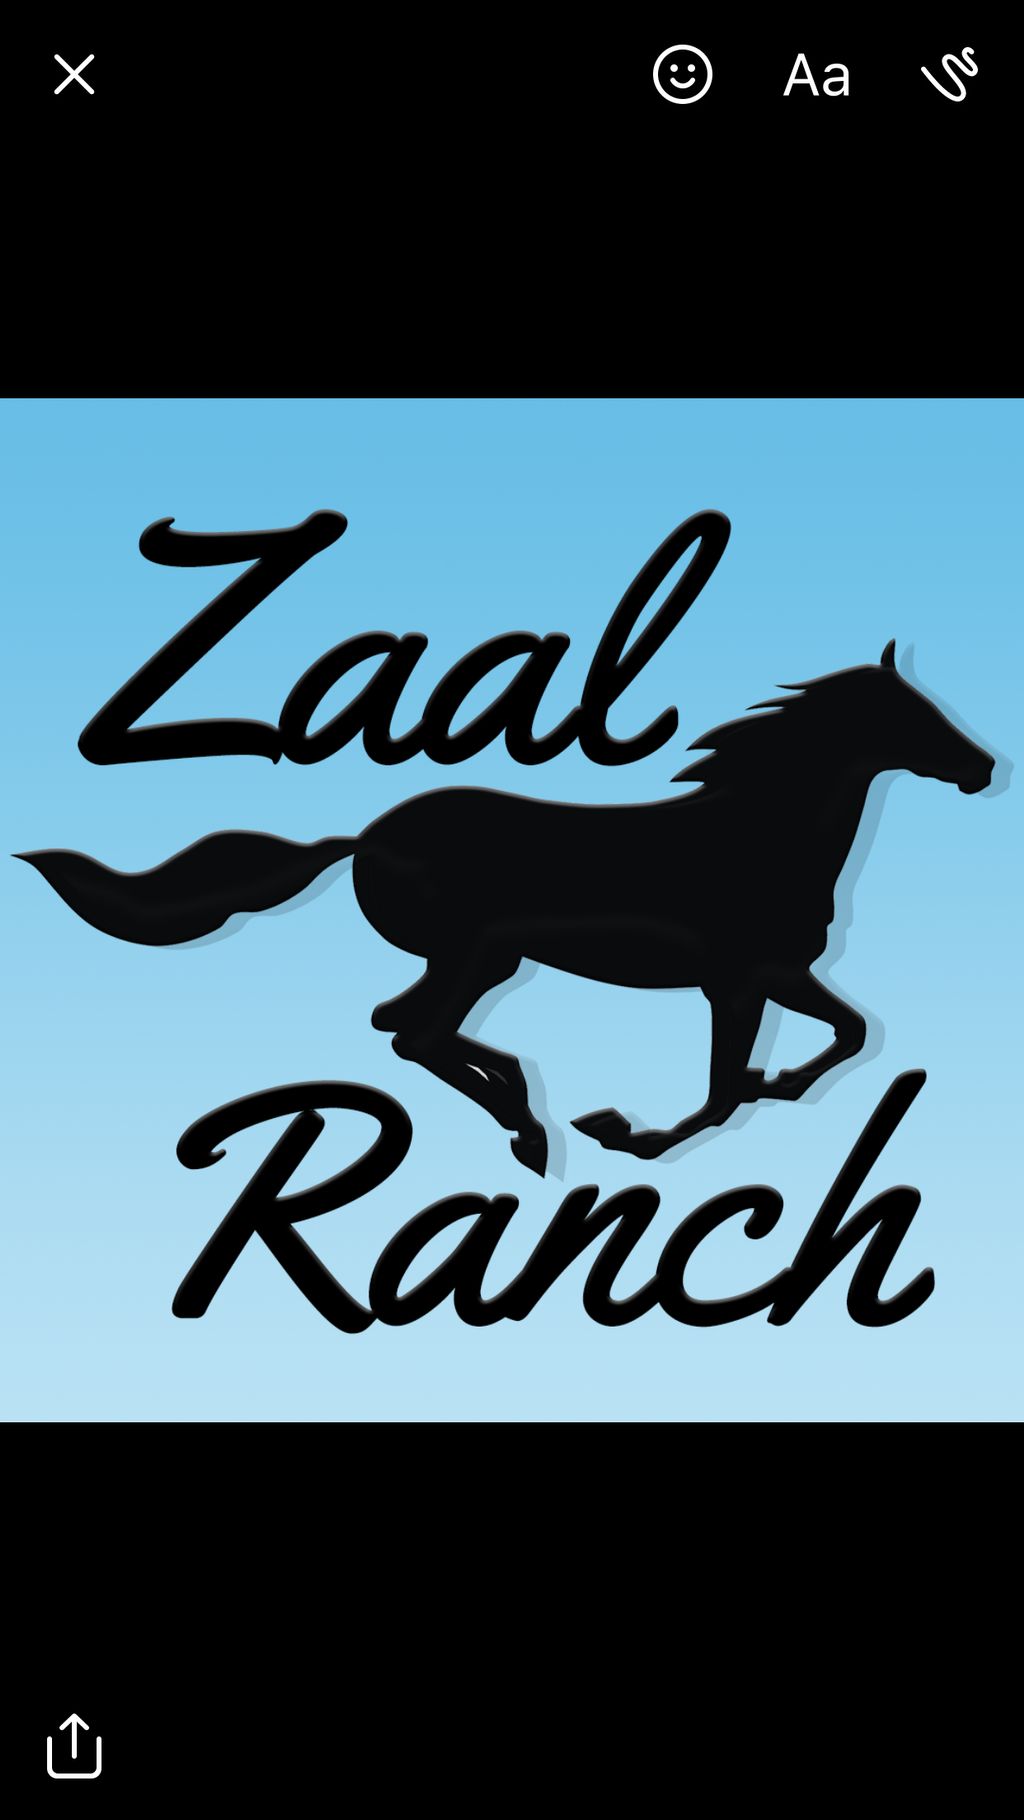 Zaal Ranch